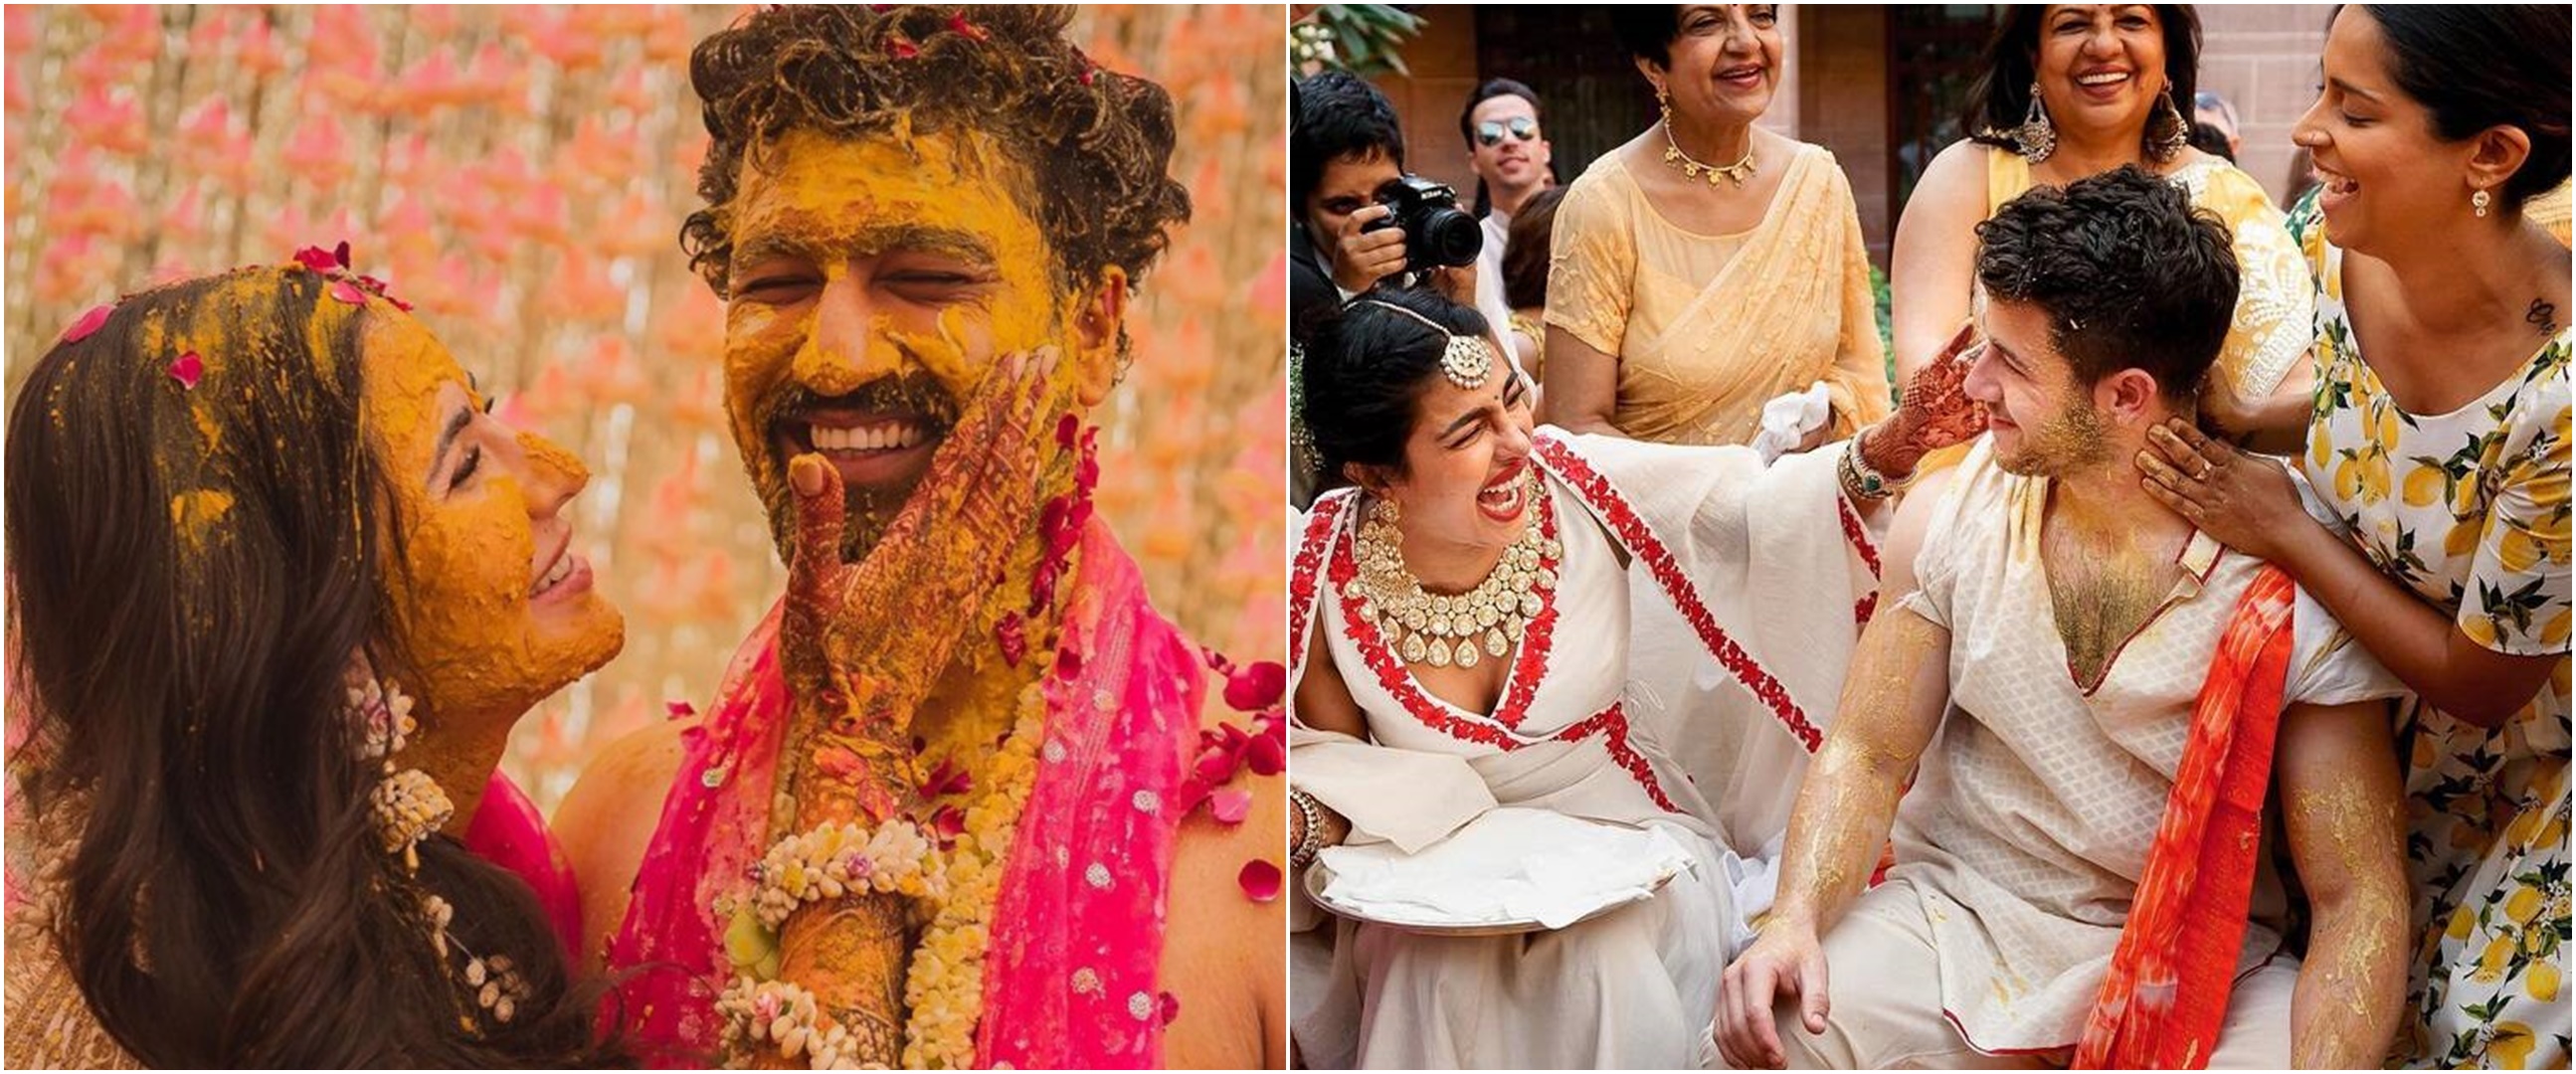 Momen ritual haldi jelang nikah 9 pasangan seleb Bollywood, meriah